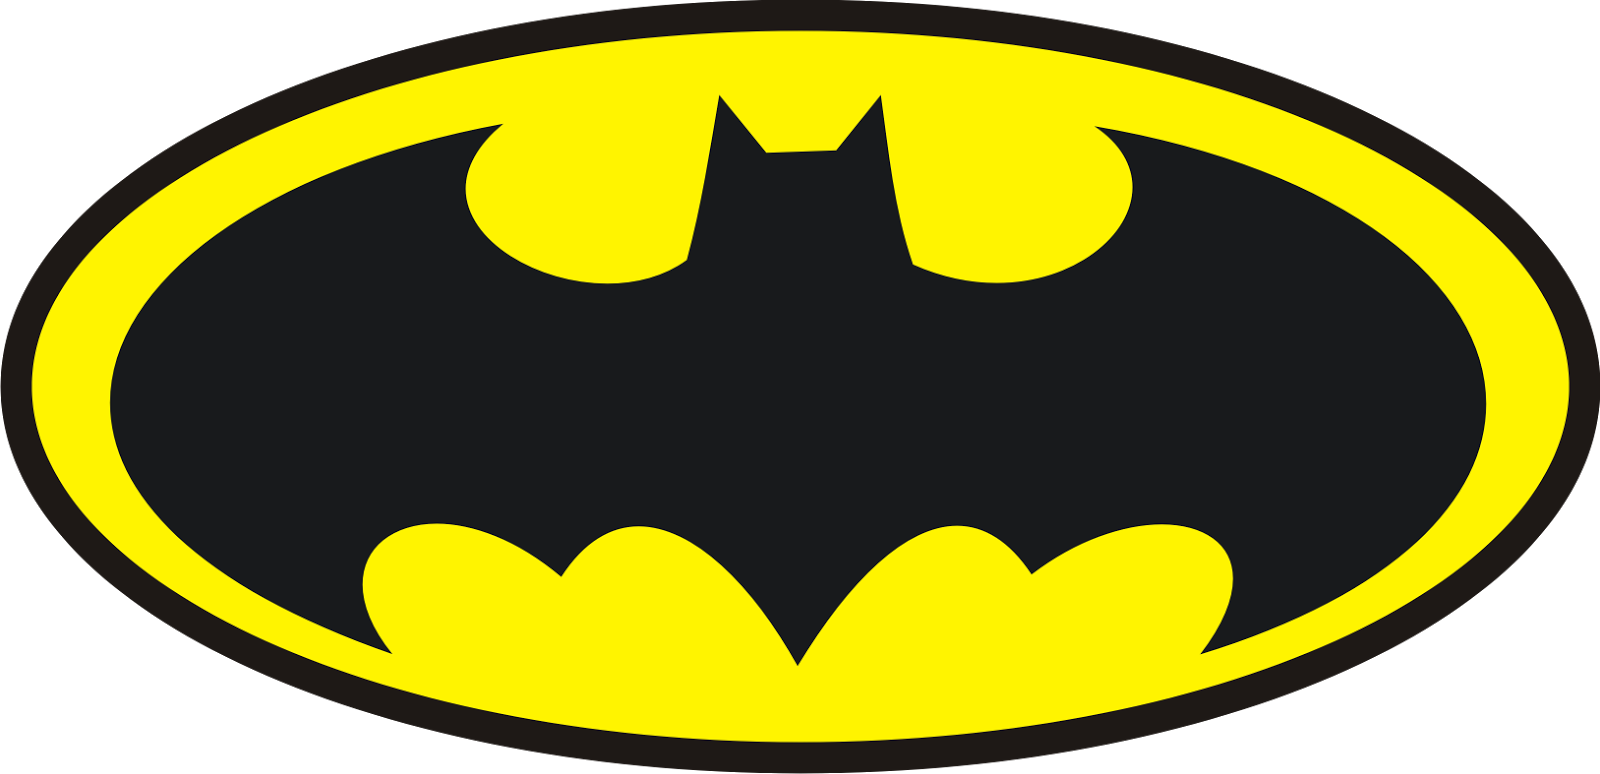 logo batman